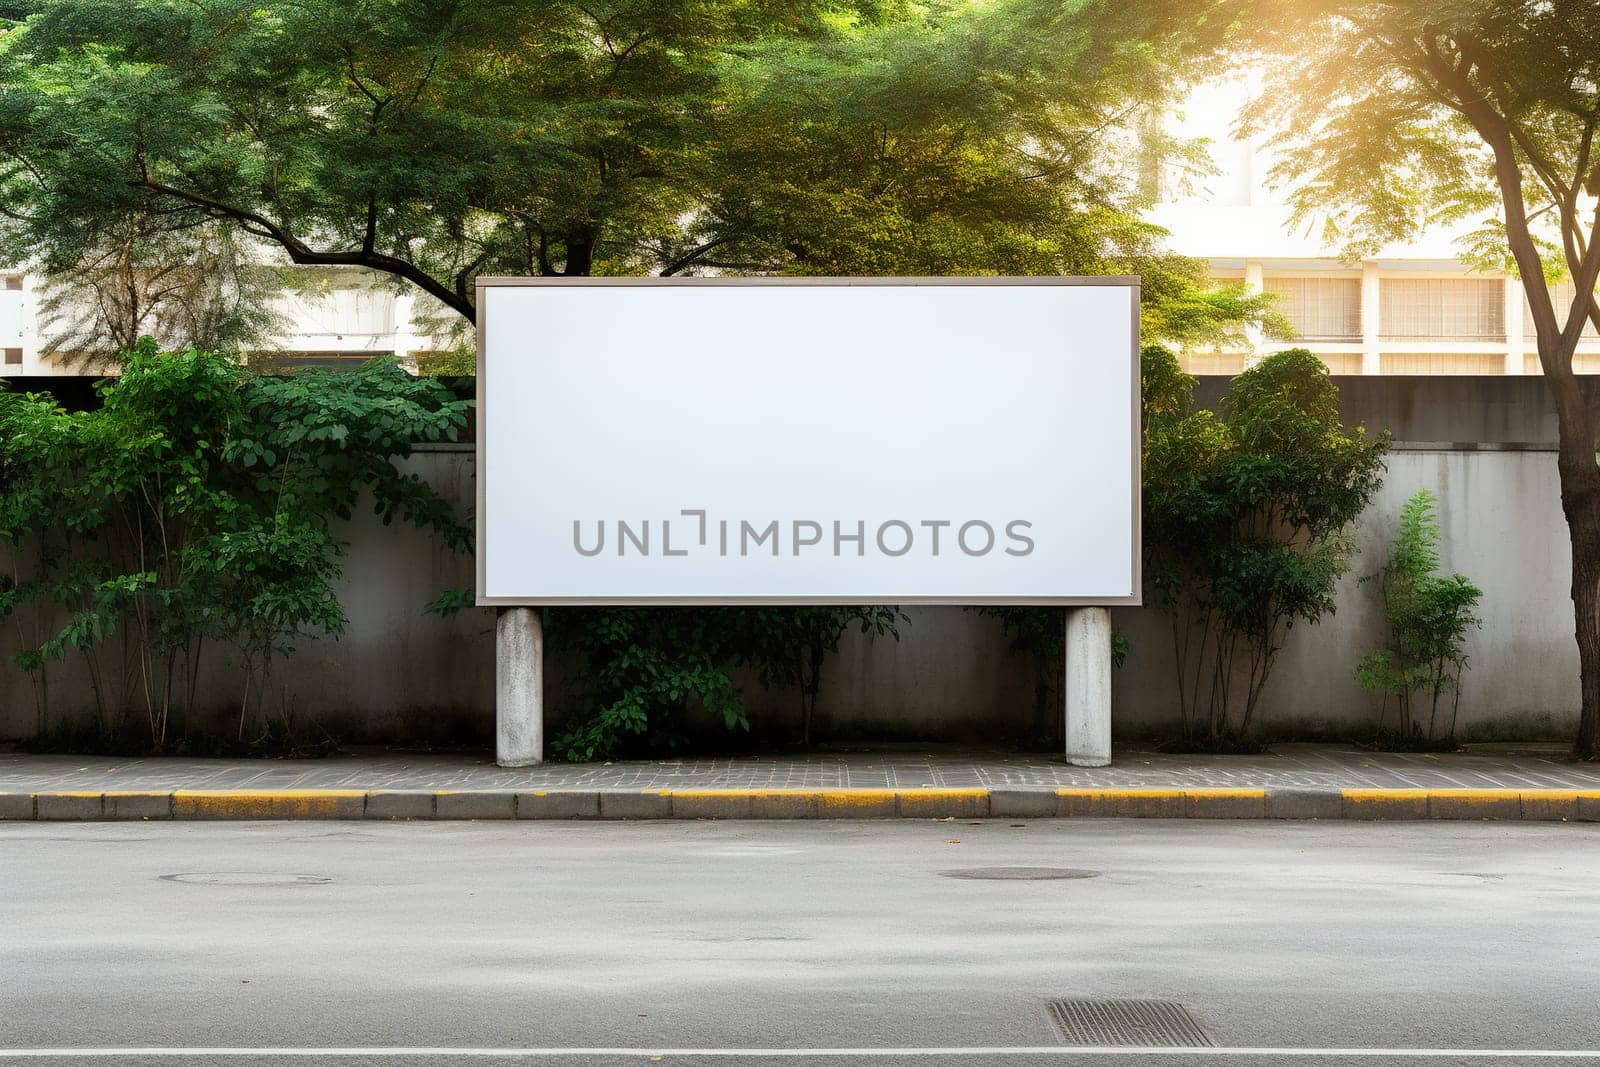 An empty billboard in the city.